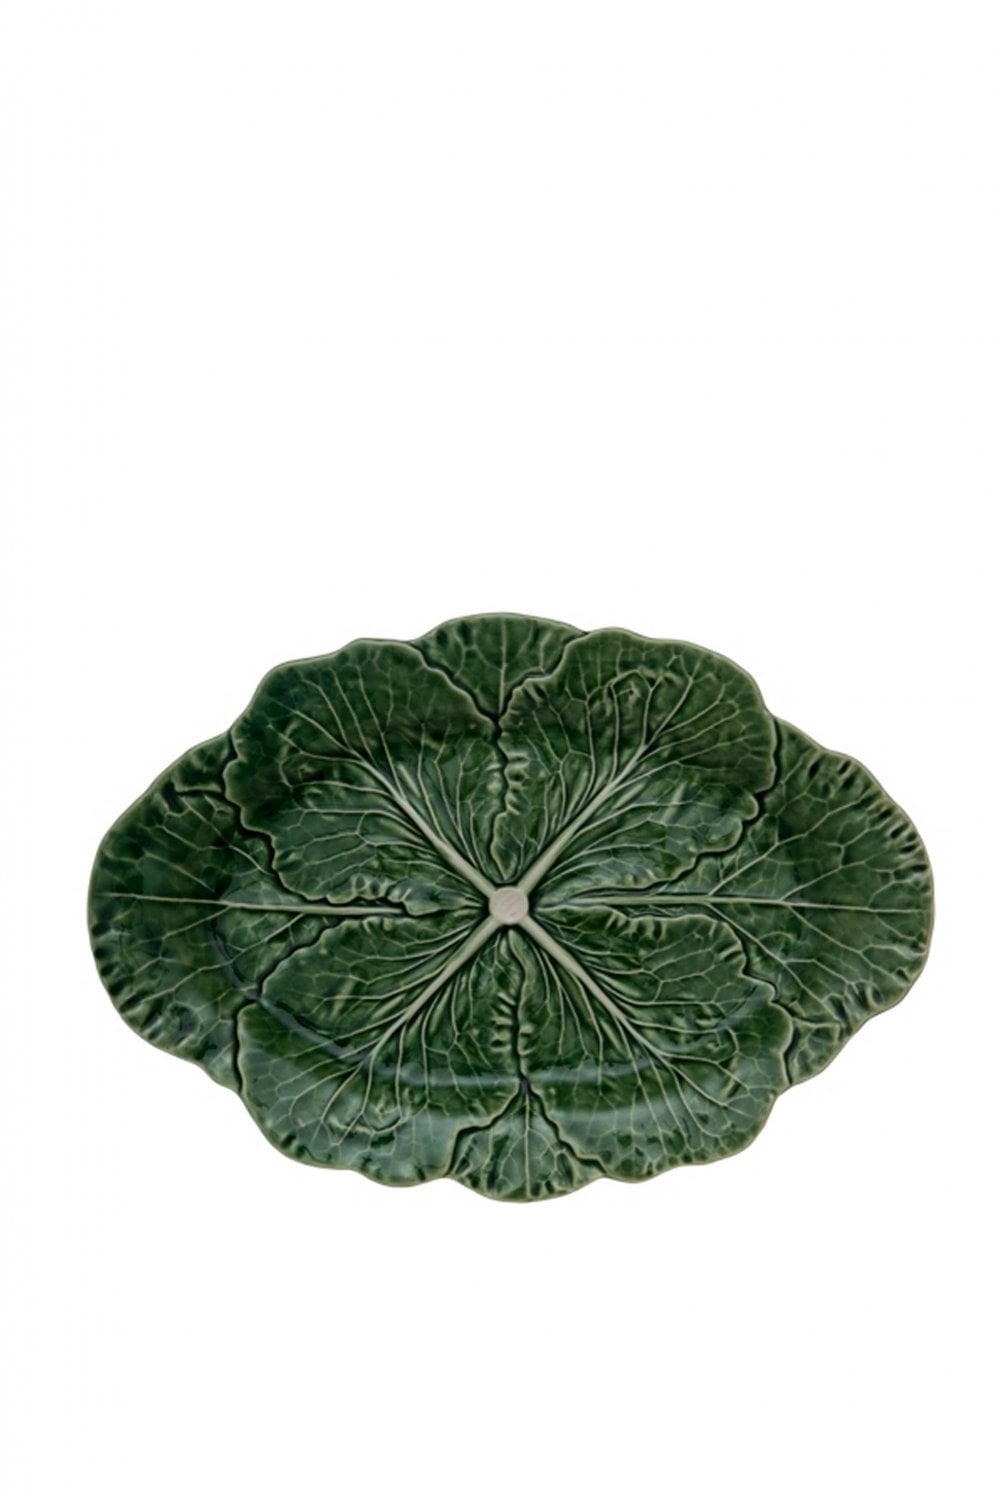 Bordallo Pinheiro Cabbage Oval Platter